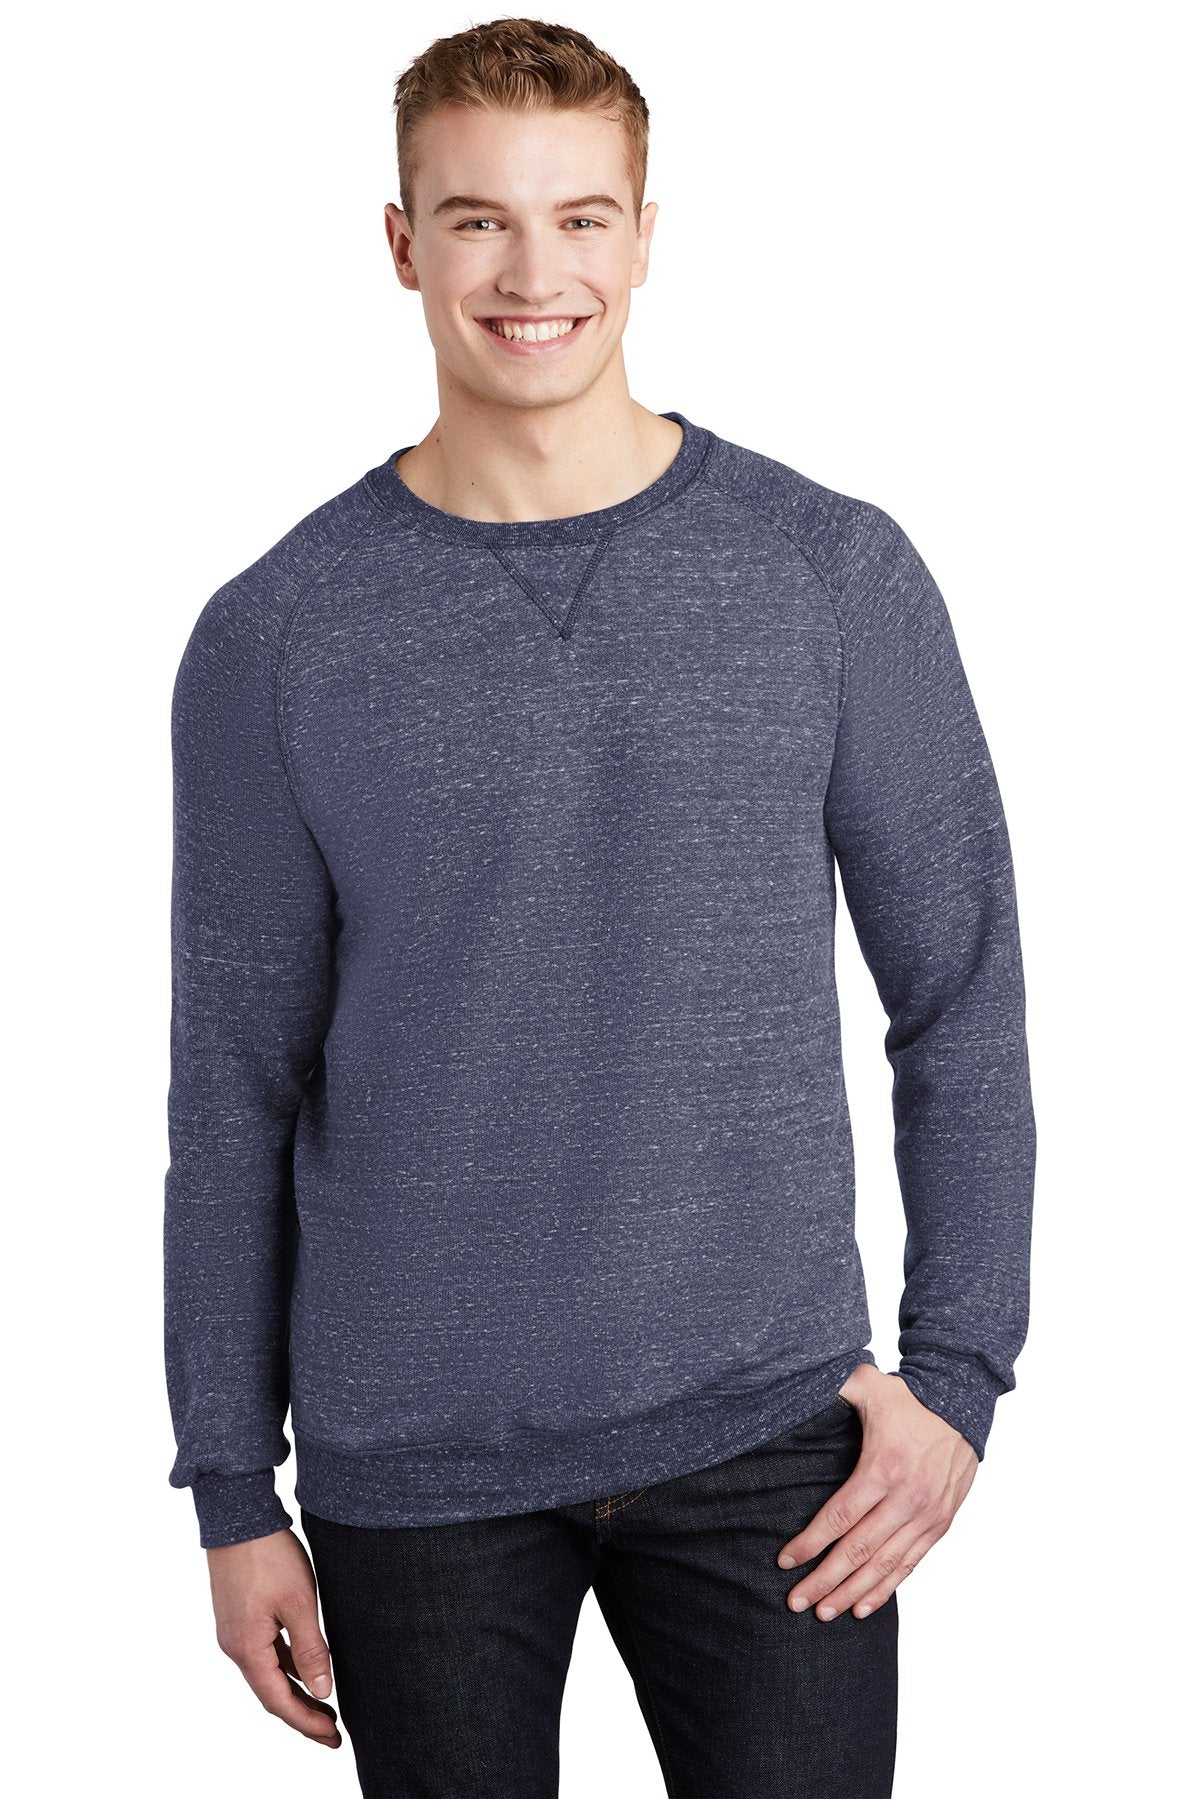 Jerzees Navy 91M custom design sweatshirts